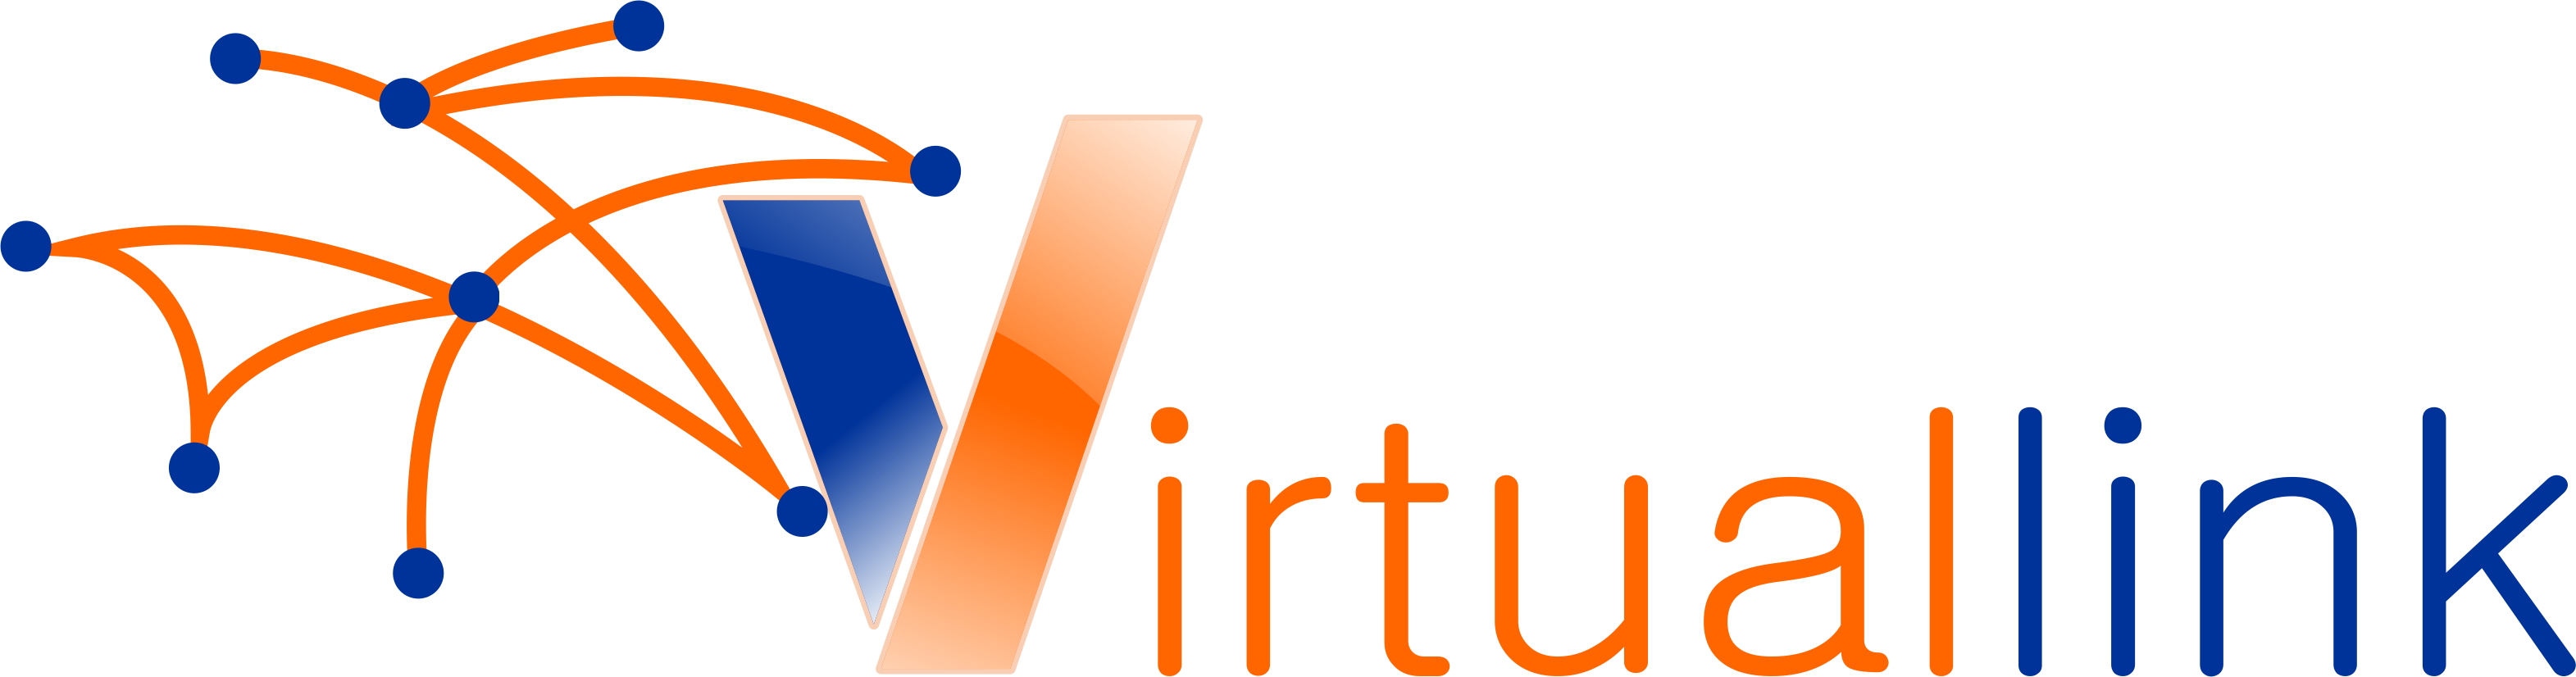 Virtual Link Logo